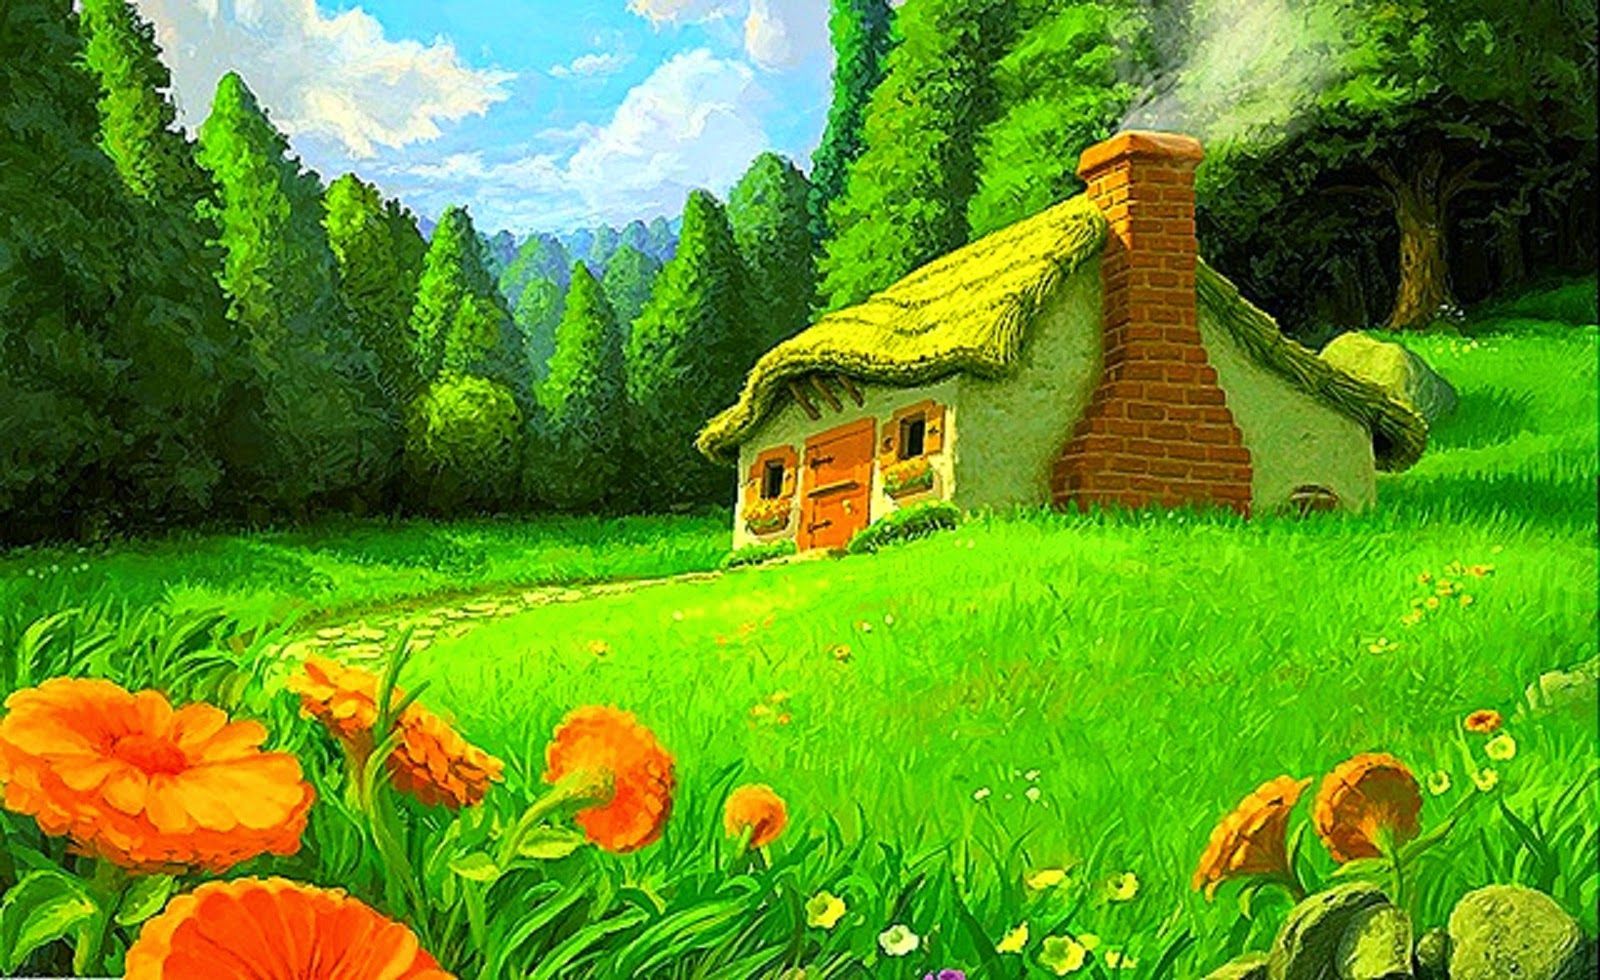 Beautiful Windows 7 Background HD Wallpaper Free. Scenery wallpaper, Landscape wallpaper, Nature wallpaper